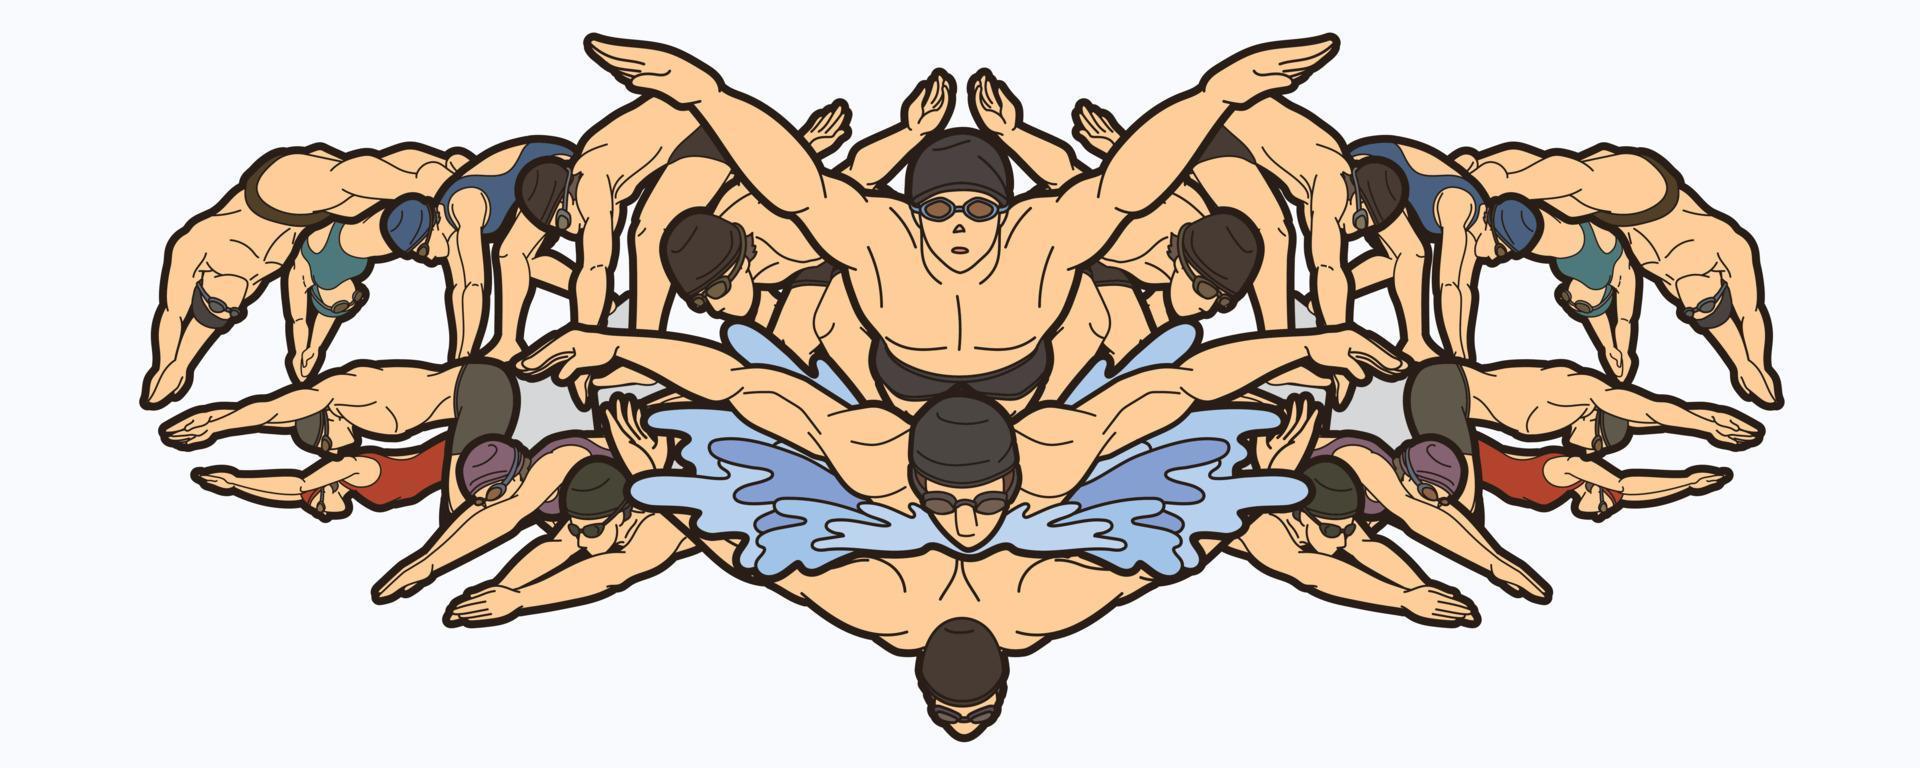 grupo de nadador acción deportiva de natación vector